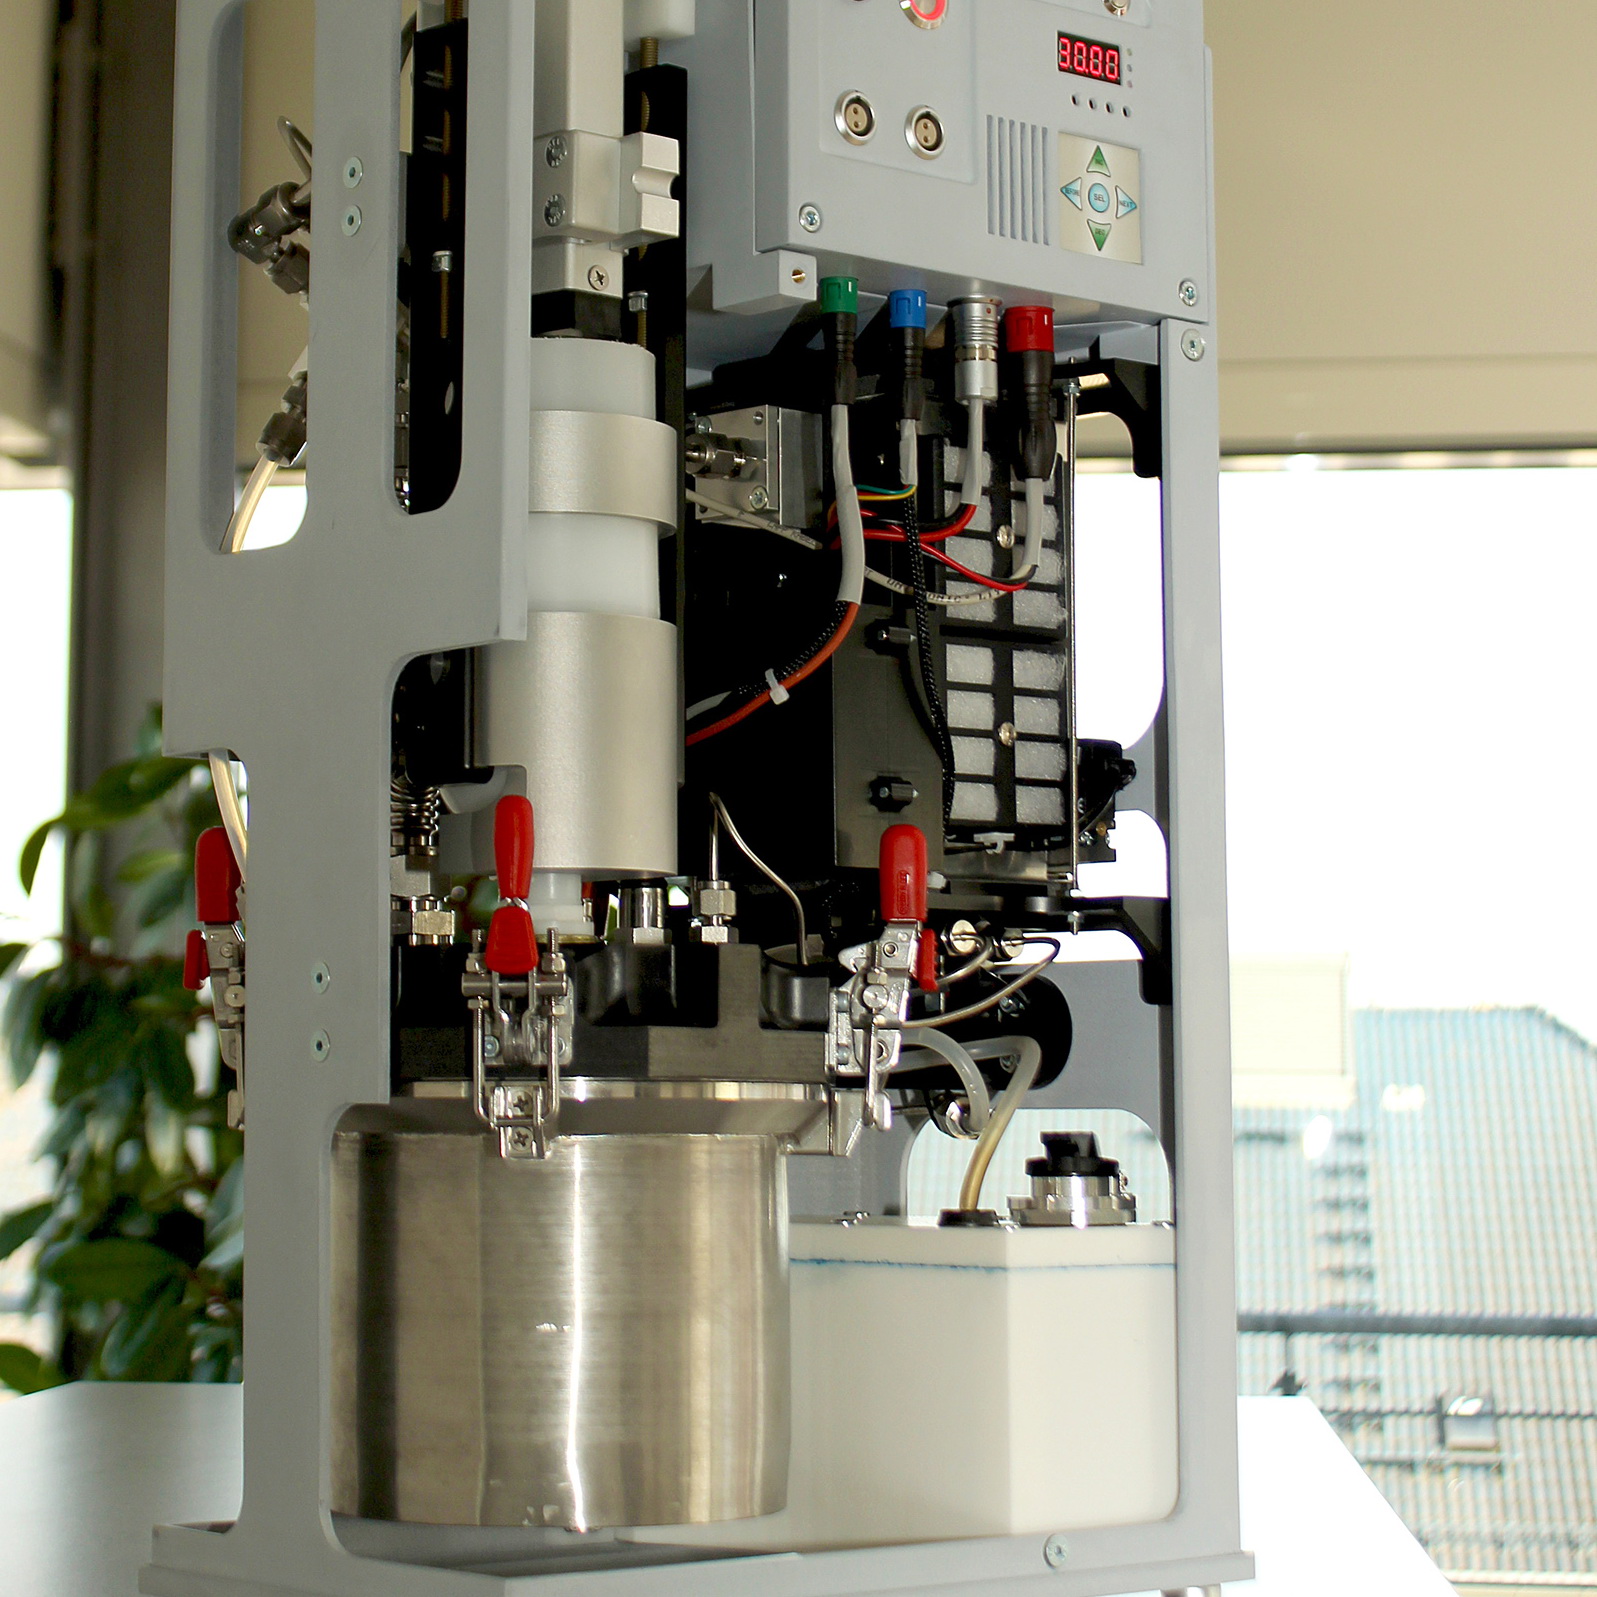 Fraunhofer團隊建造並測試了Powerpaste原型發電機。（Fraunhofer IFAM網上圖片）